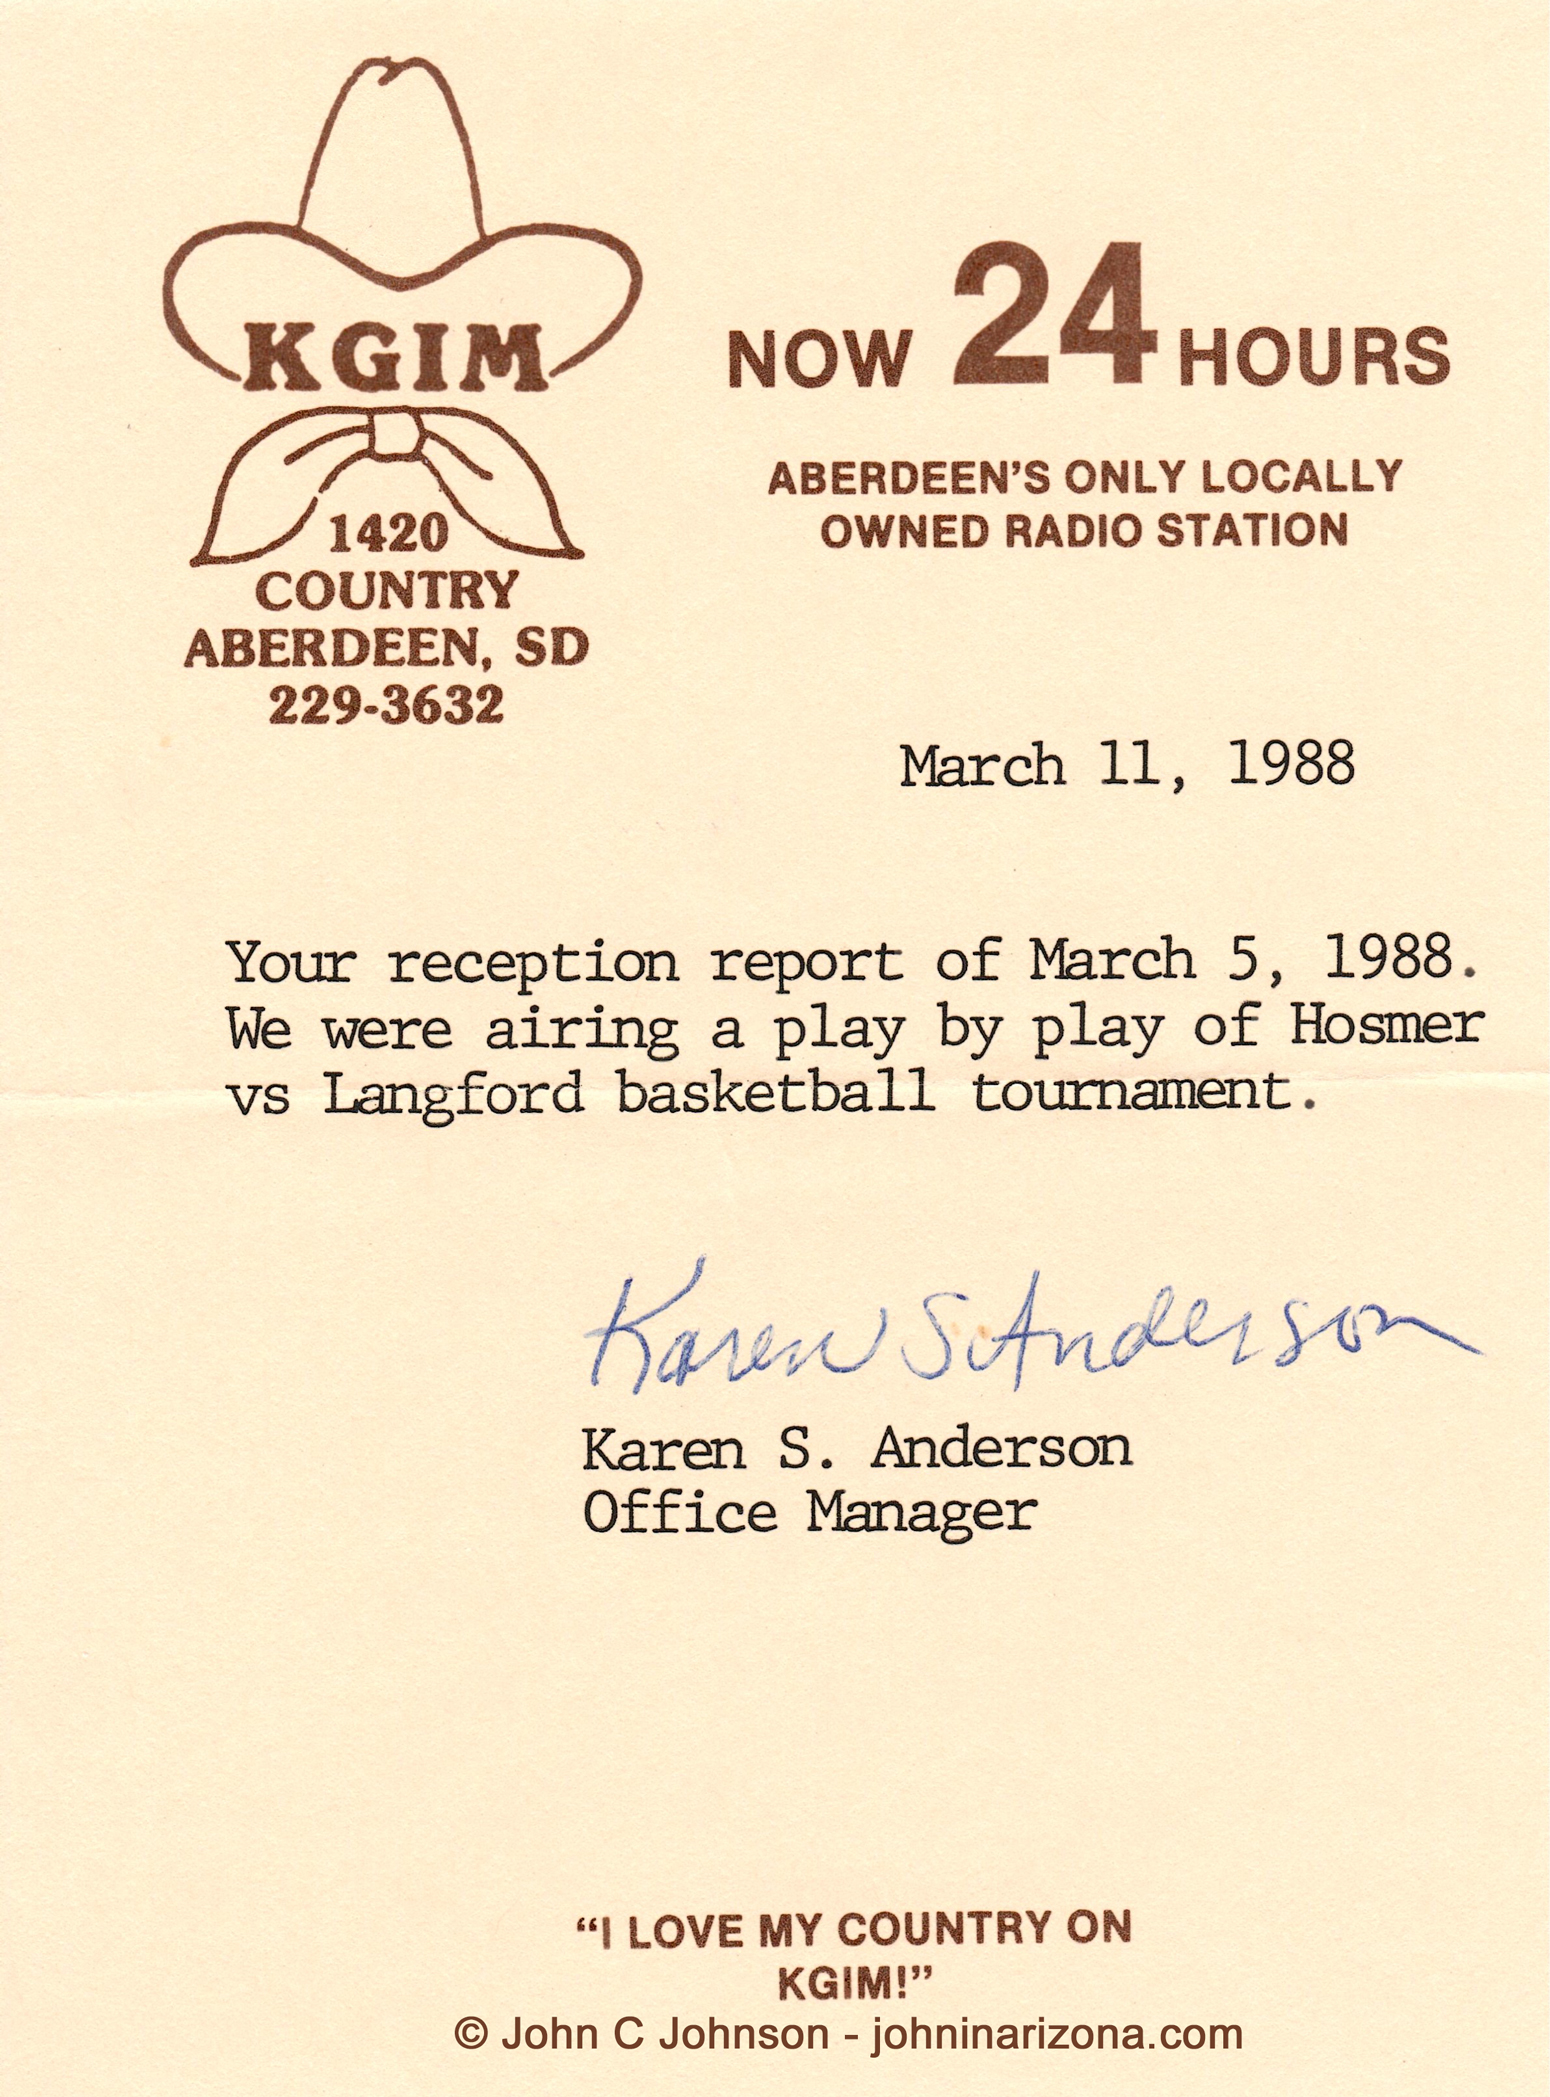 KGIM Radio 1420 Aberdeen, South Dakota